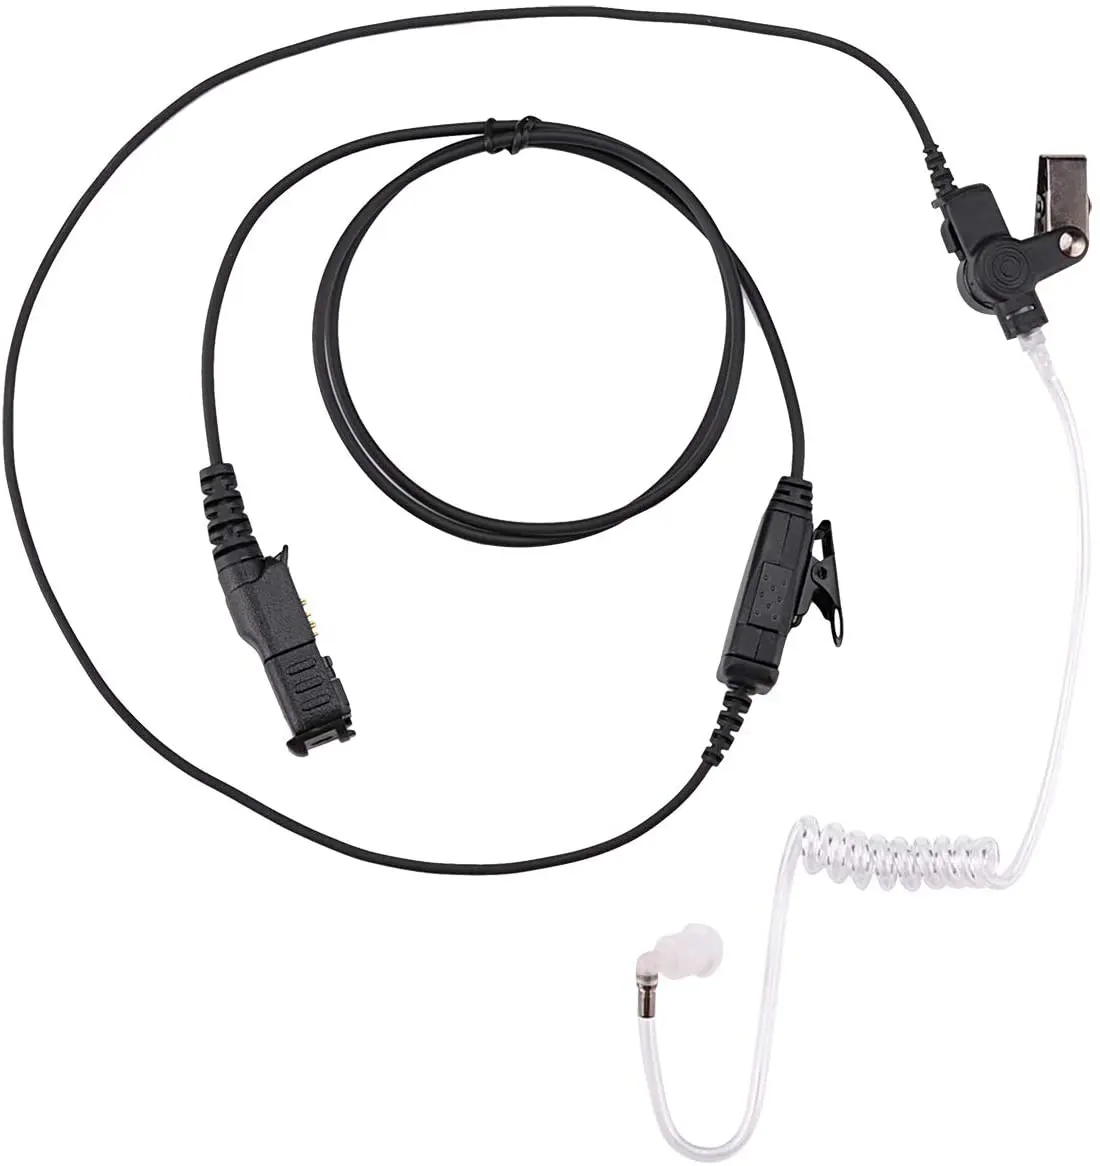 Motorola XPR 3500e Earpiece,XPR 3300e XPR3500 XPR3000 XPR3300 Walkie Talkie earpiece headset earphone